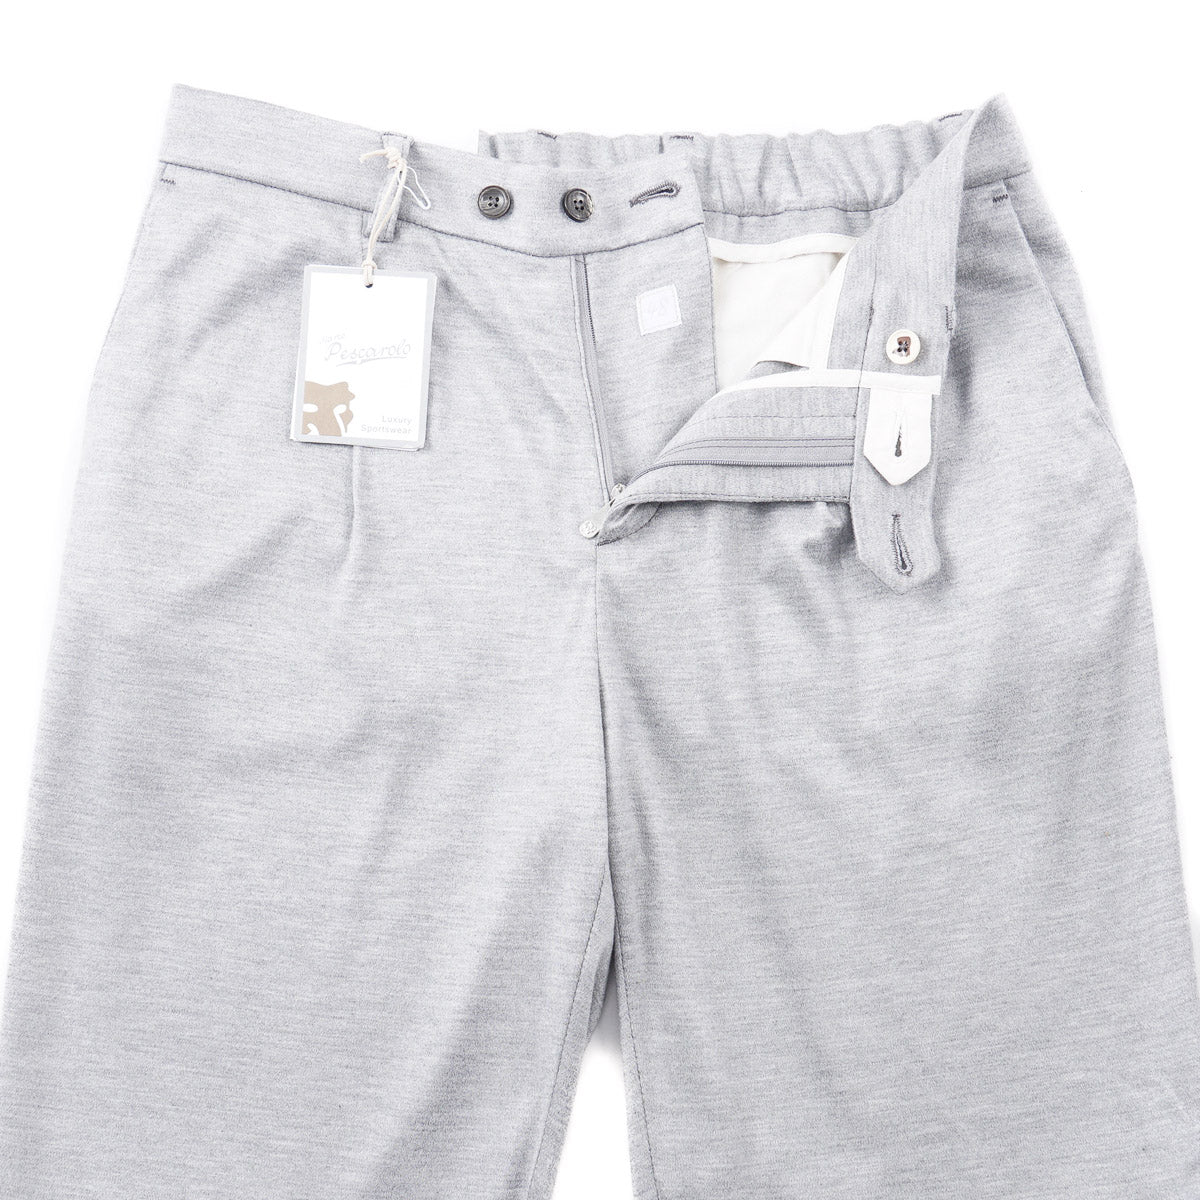 Pescarolo Soft Jersey Silk Pants - Top Shelf Apparel